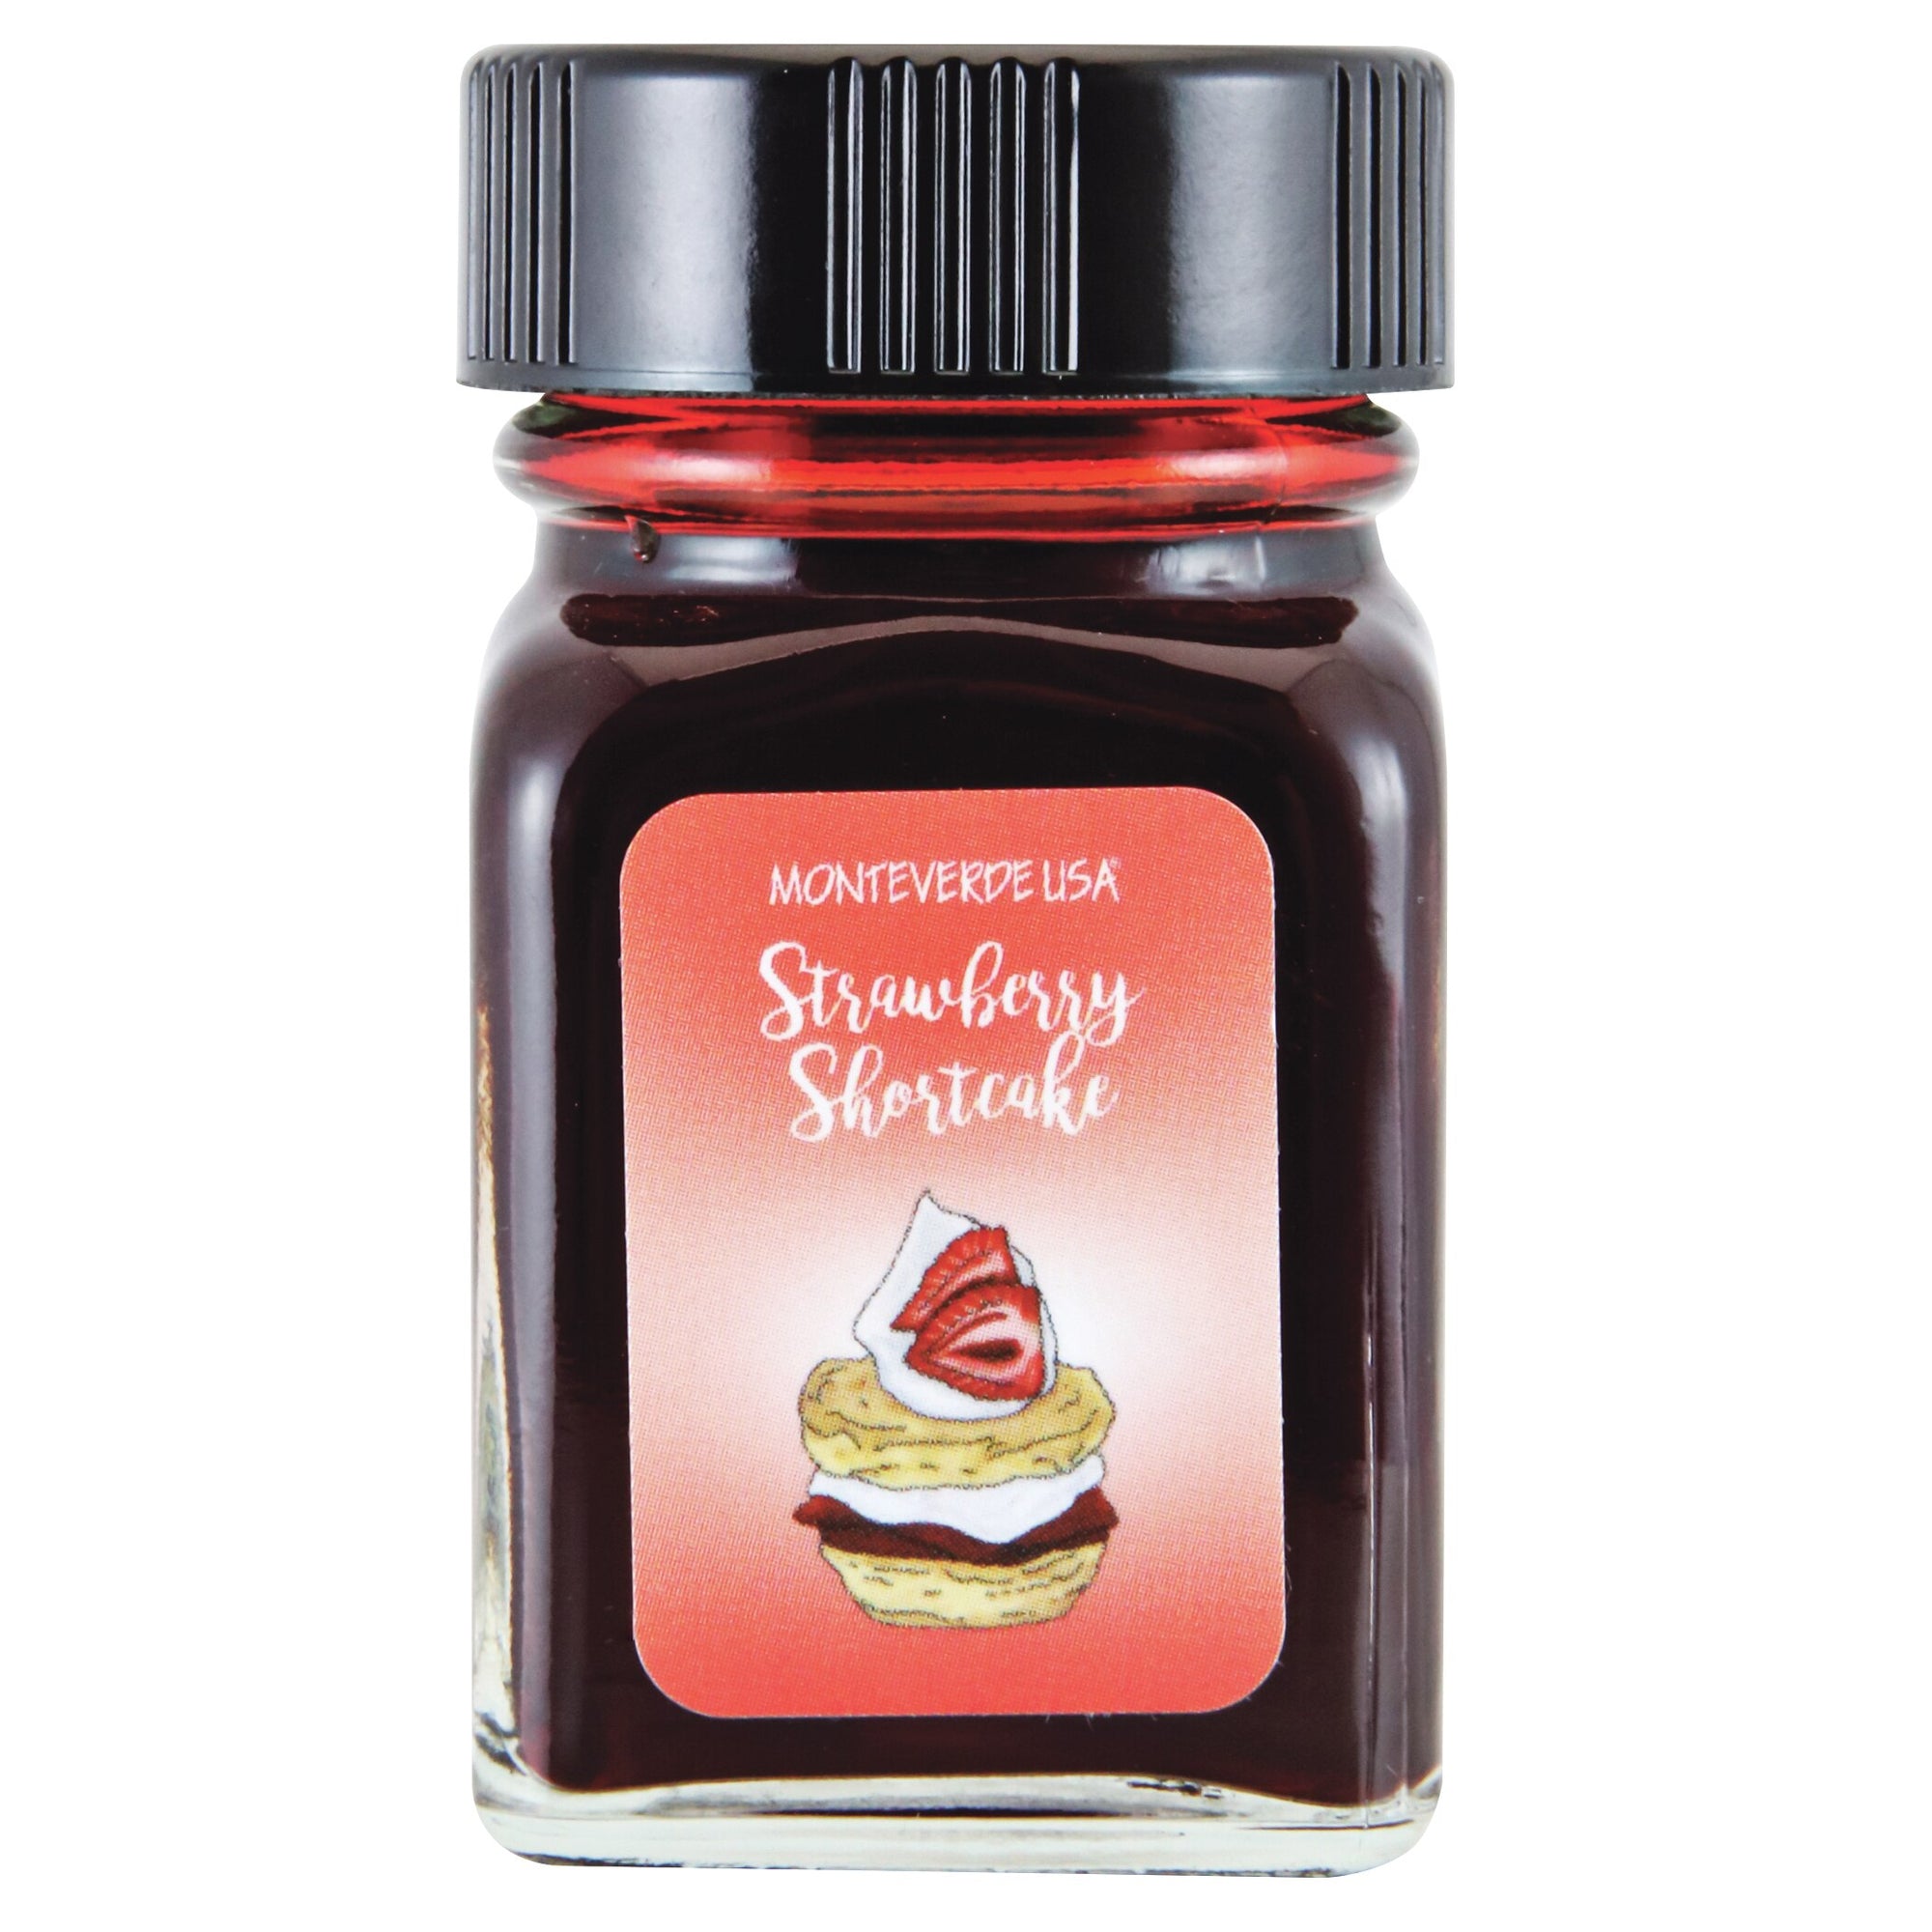 Monteverde Ink Sweet Life 30ml - Strawberry Shortcake - Blesket Canada